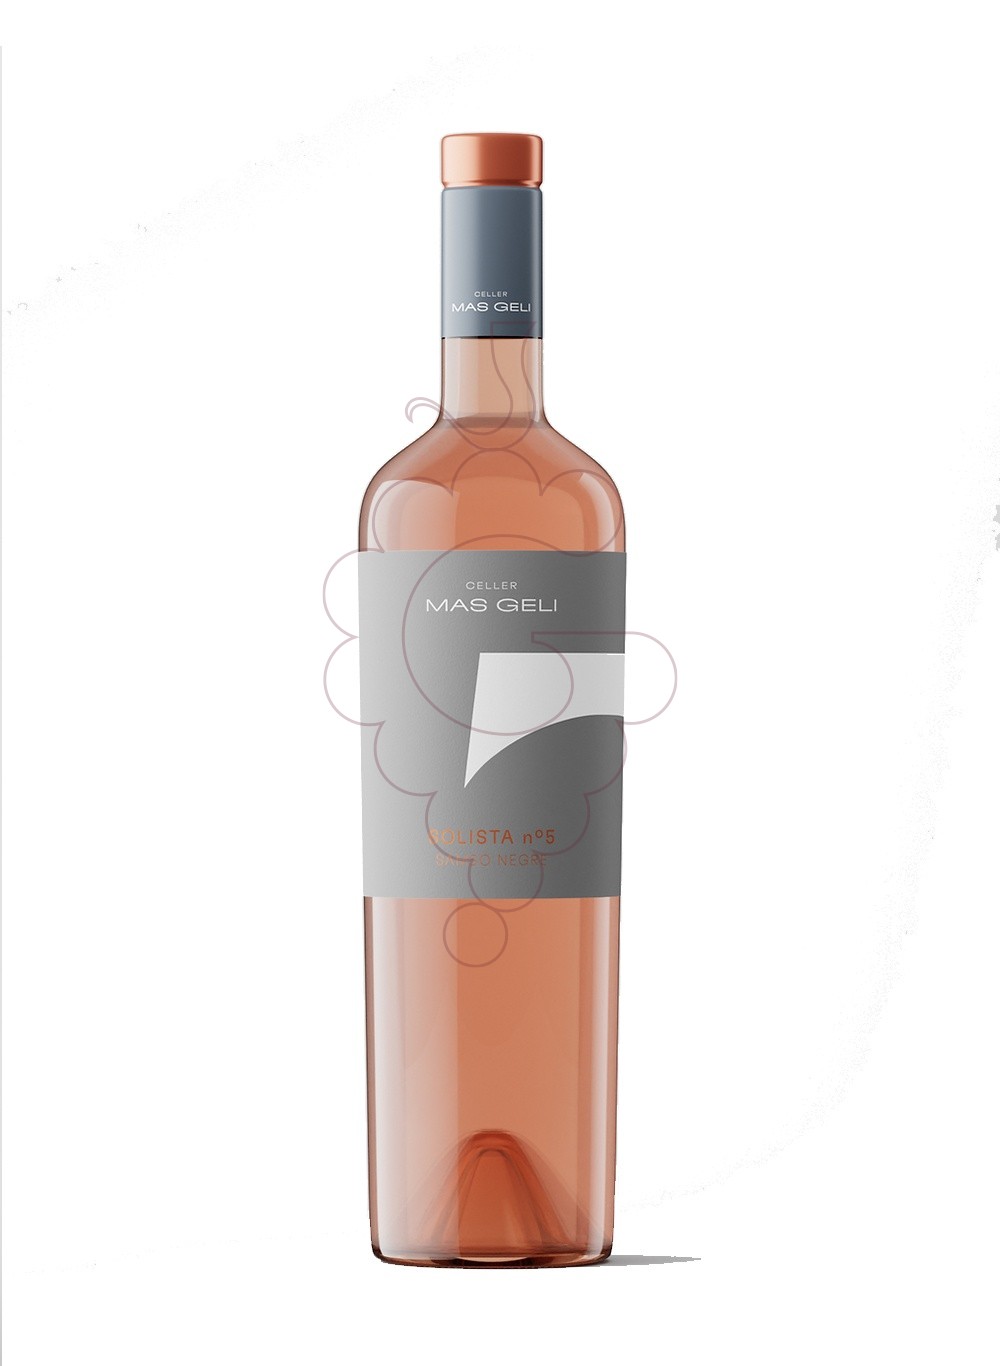 Photo Mas geli solista 5 samso rosat vin rosé